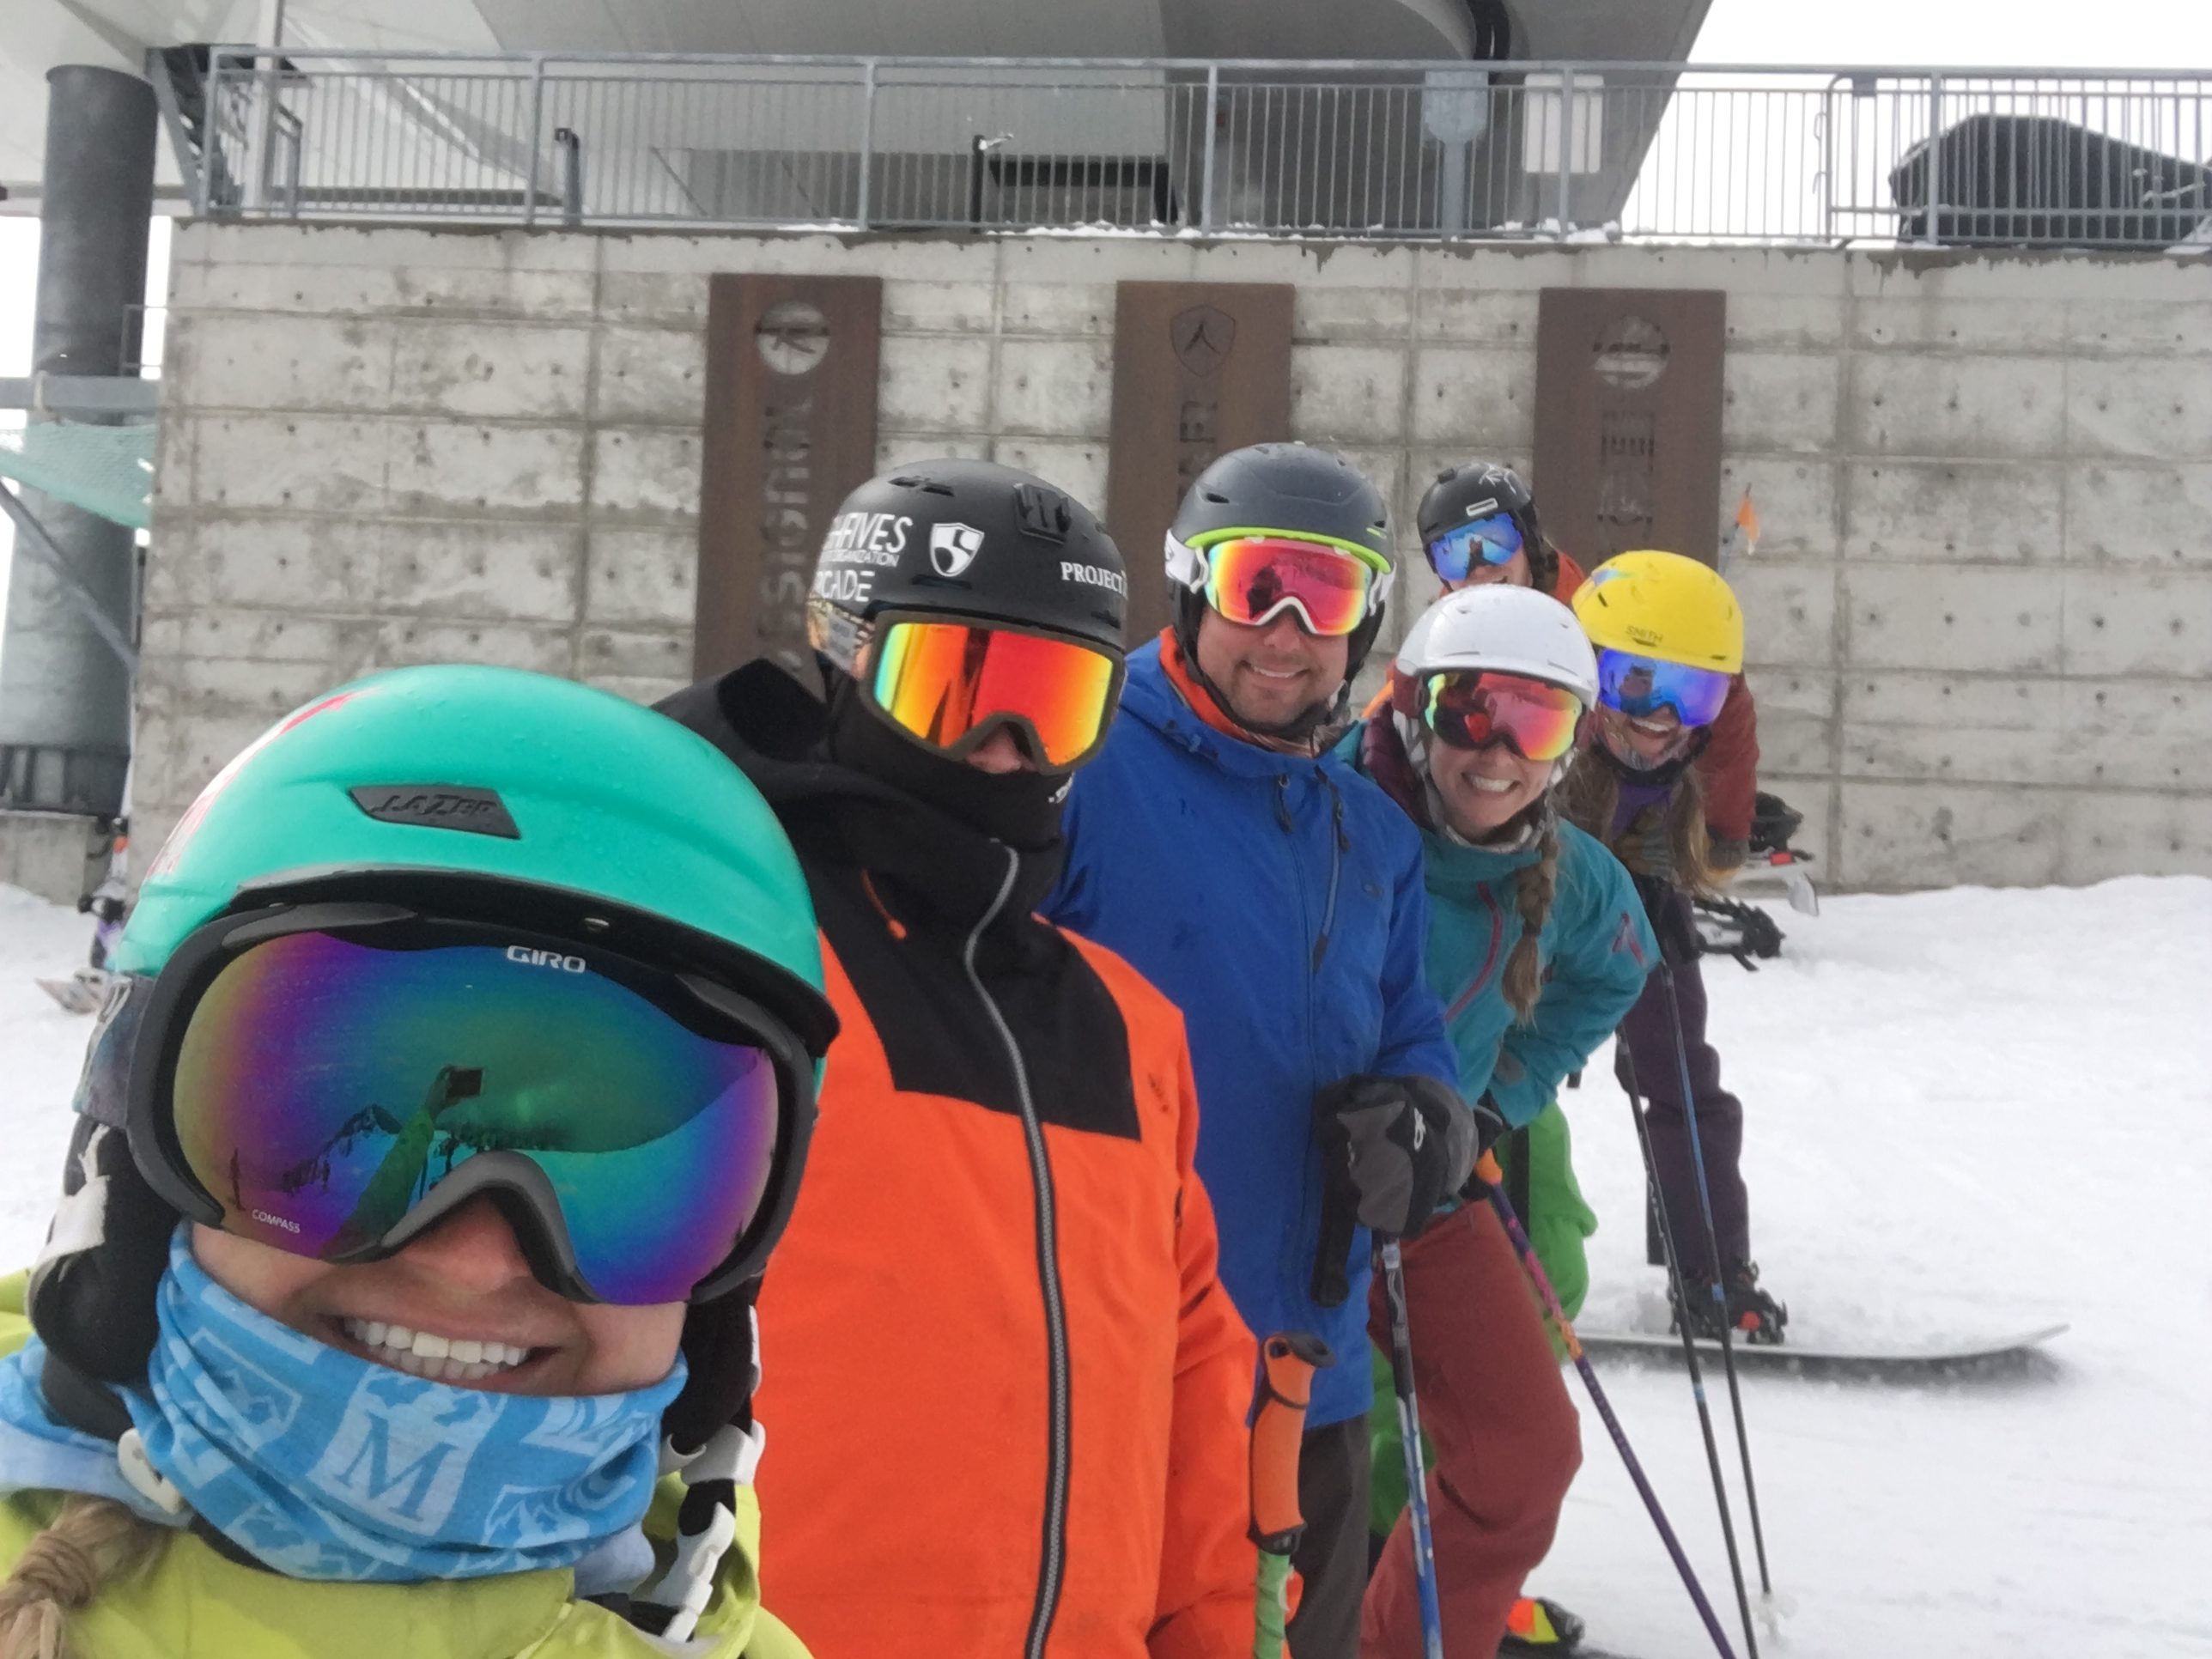 Skiers enjoying a day at Crystal Mountain Resort.